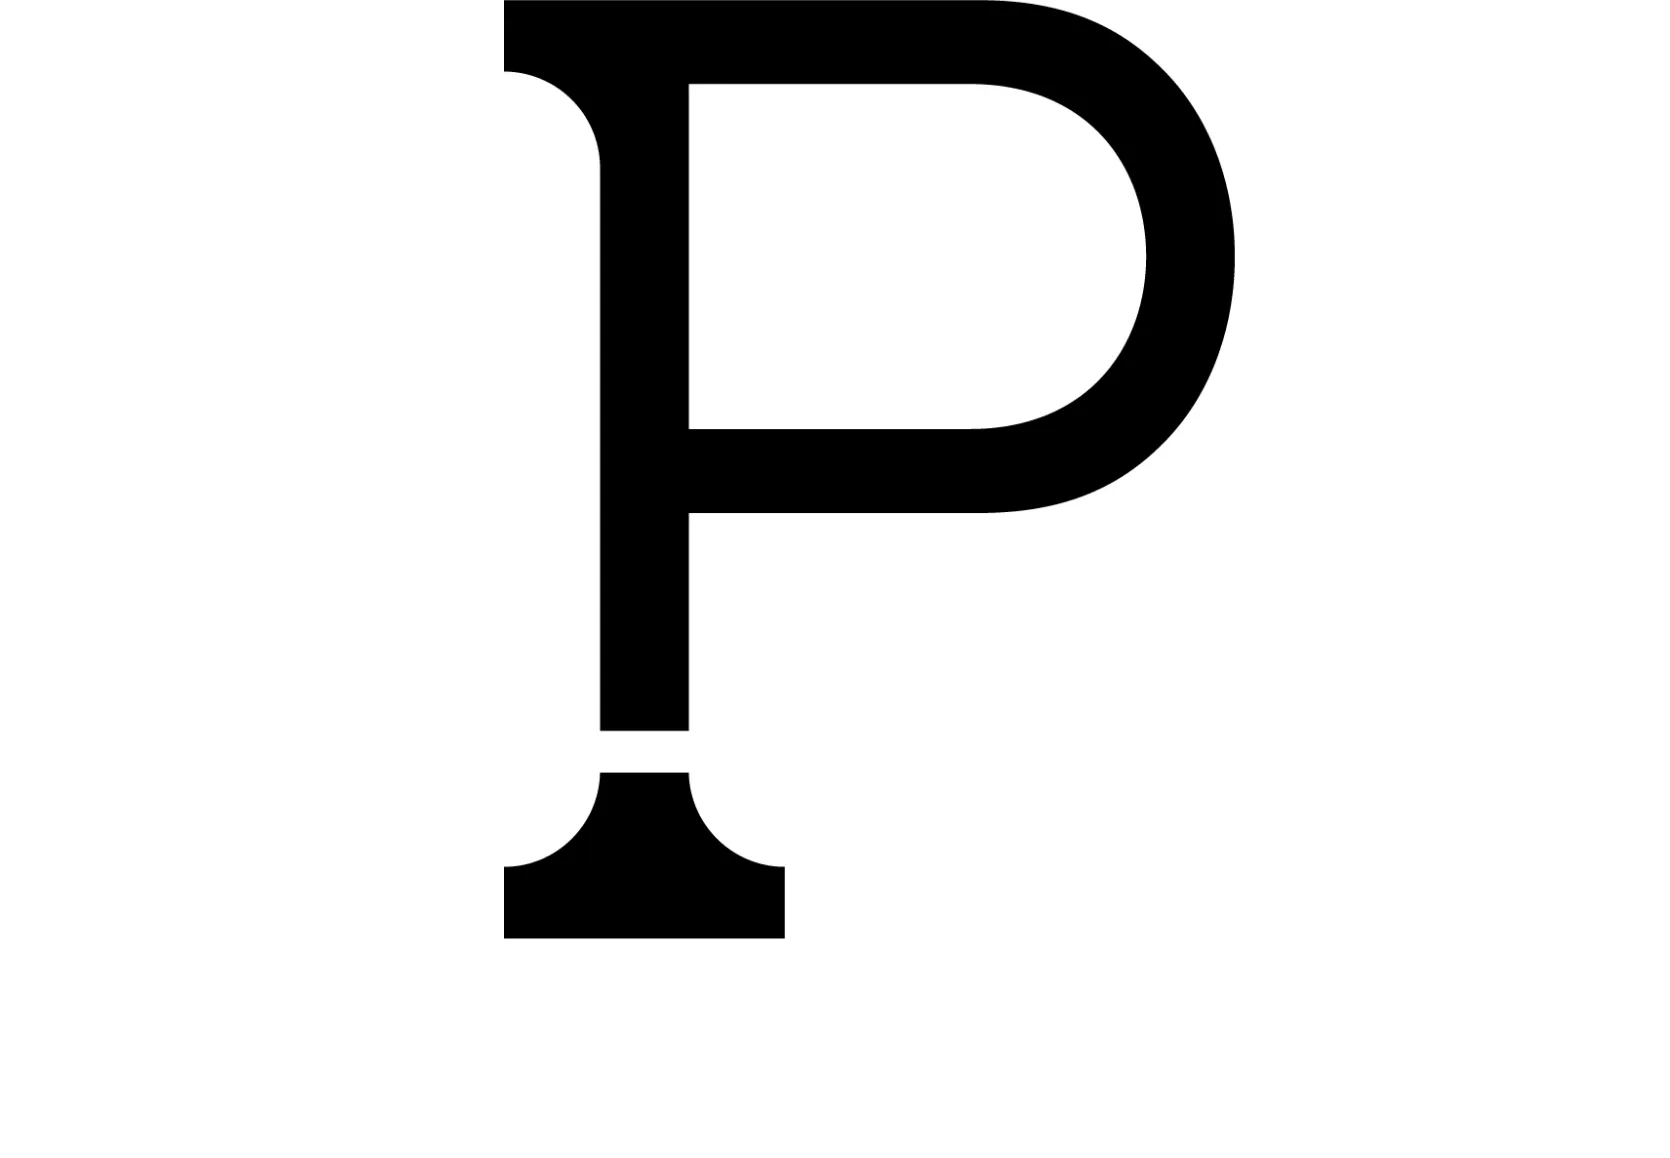 PANTS Team logo